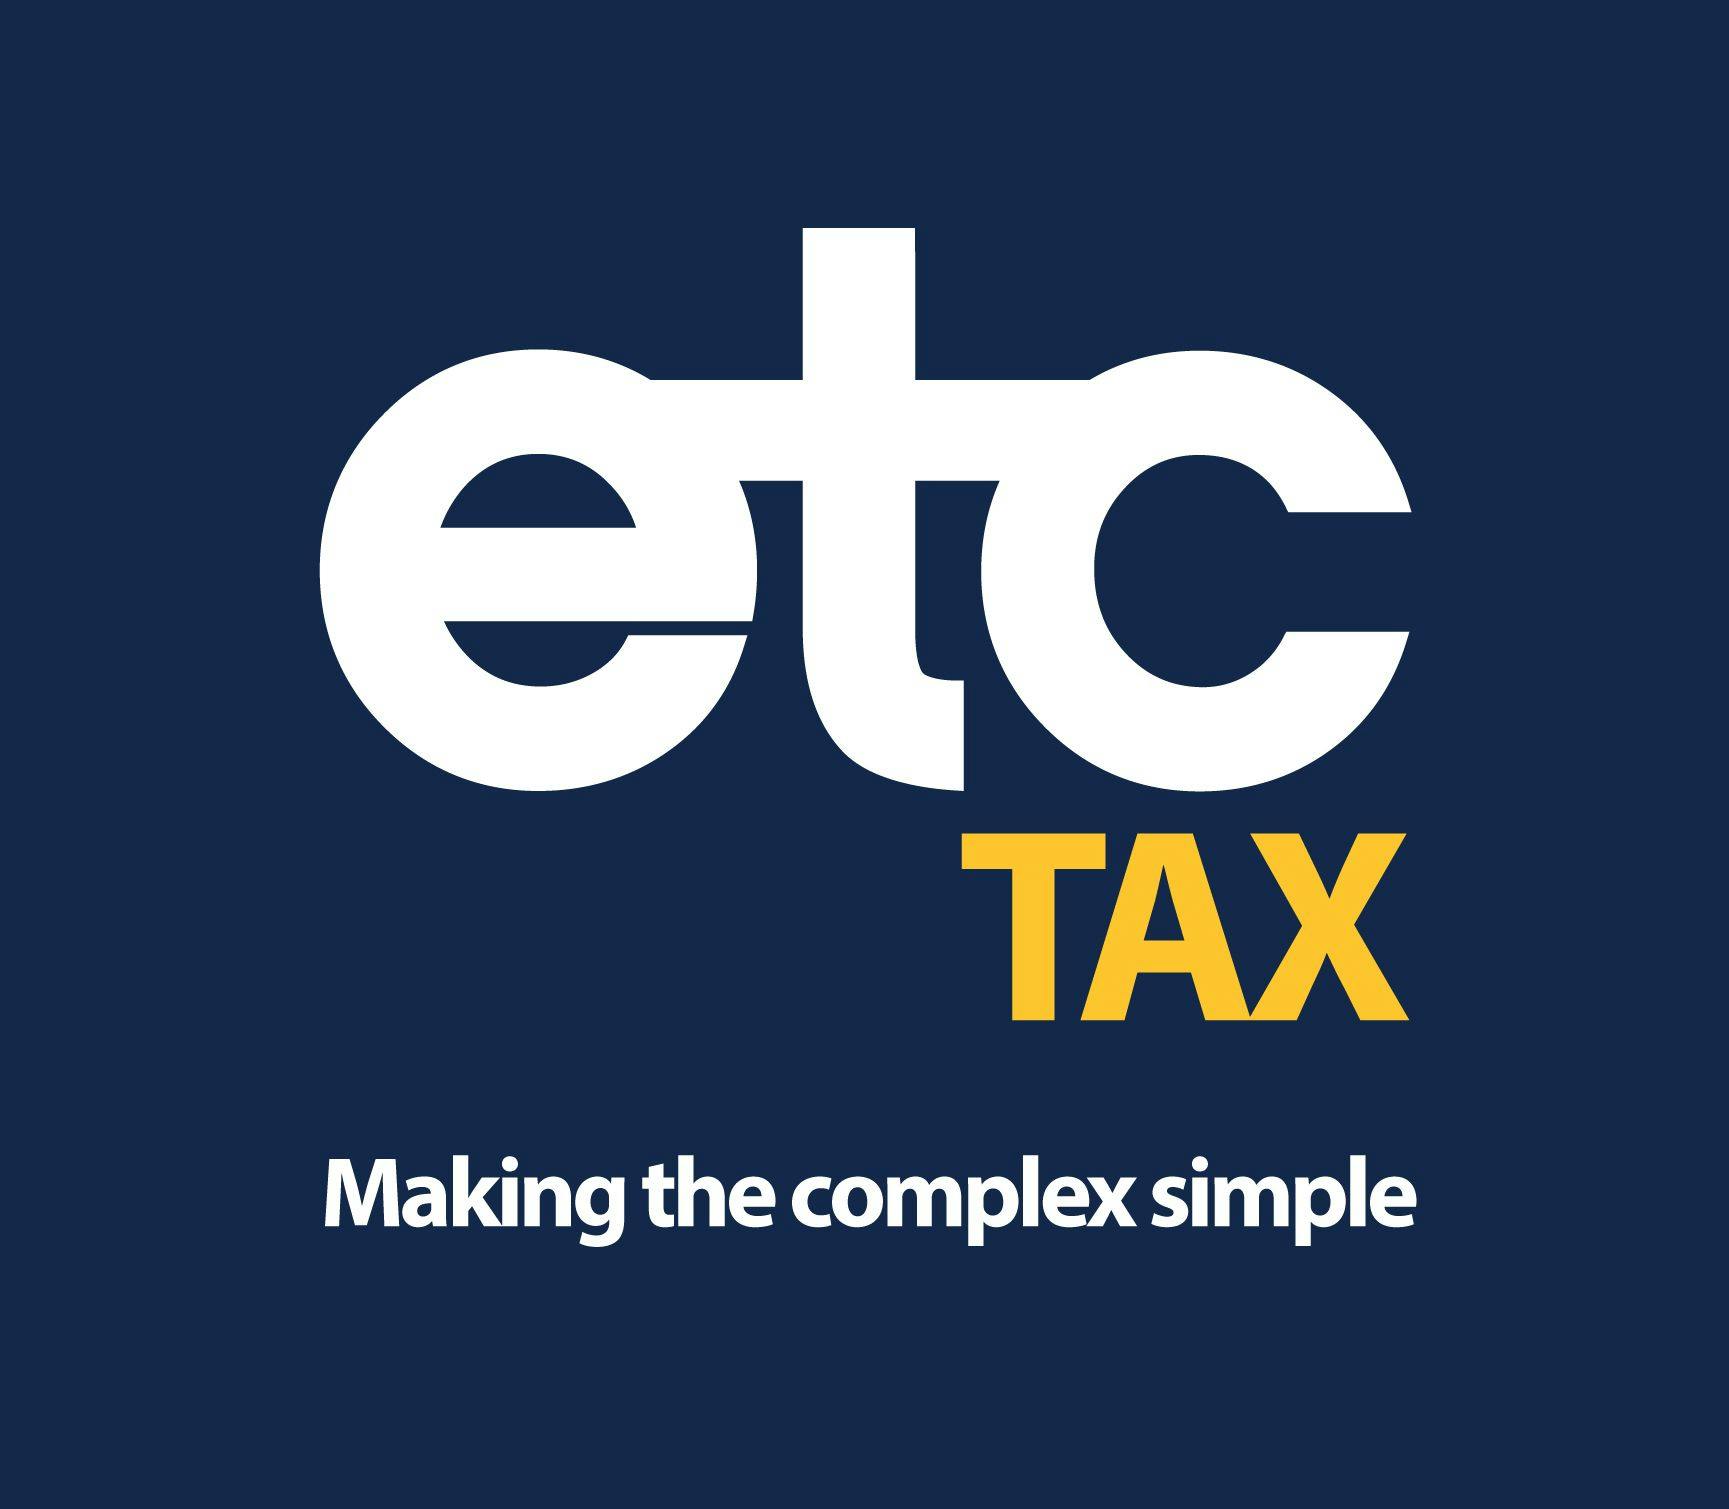 ETC Tax logo